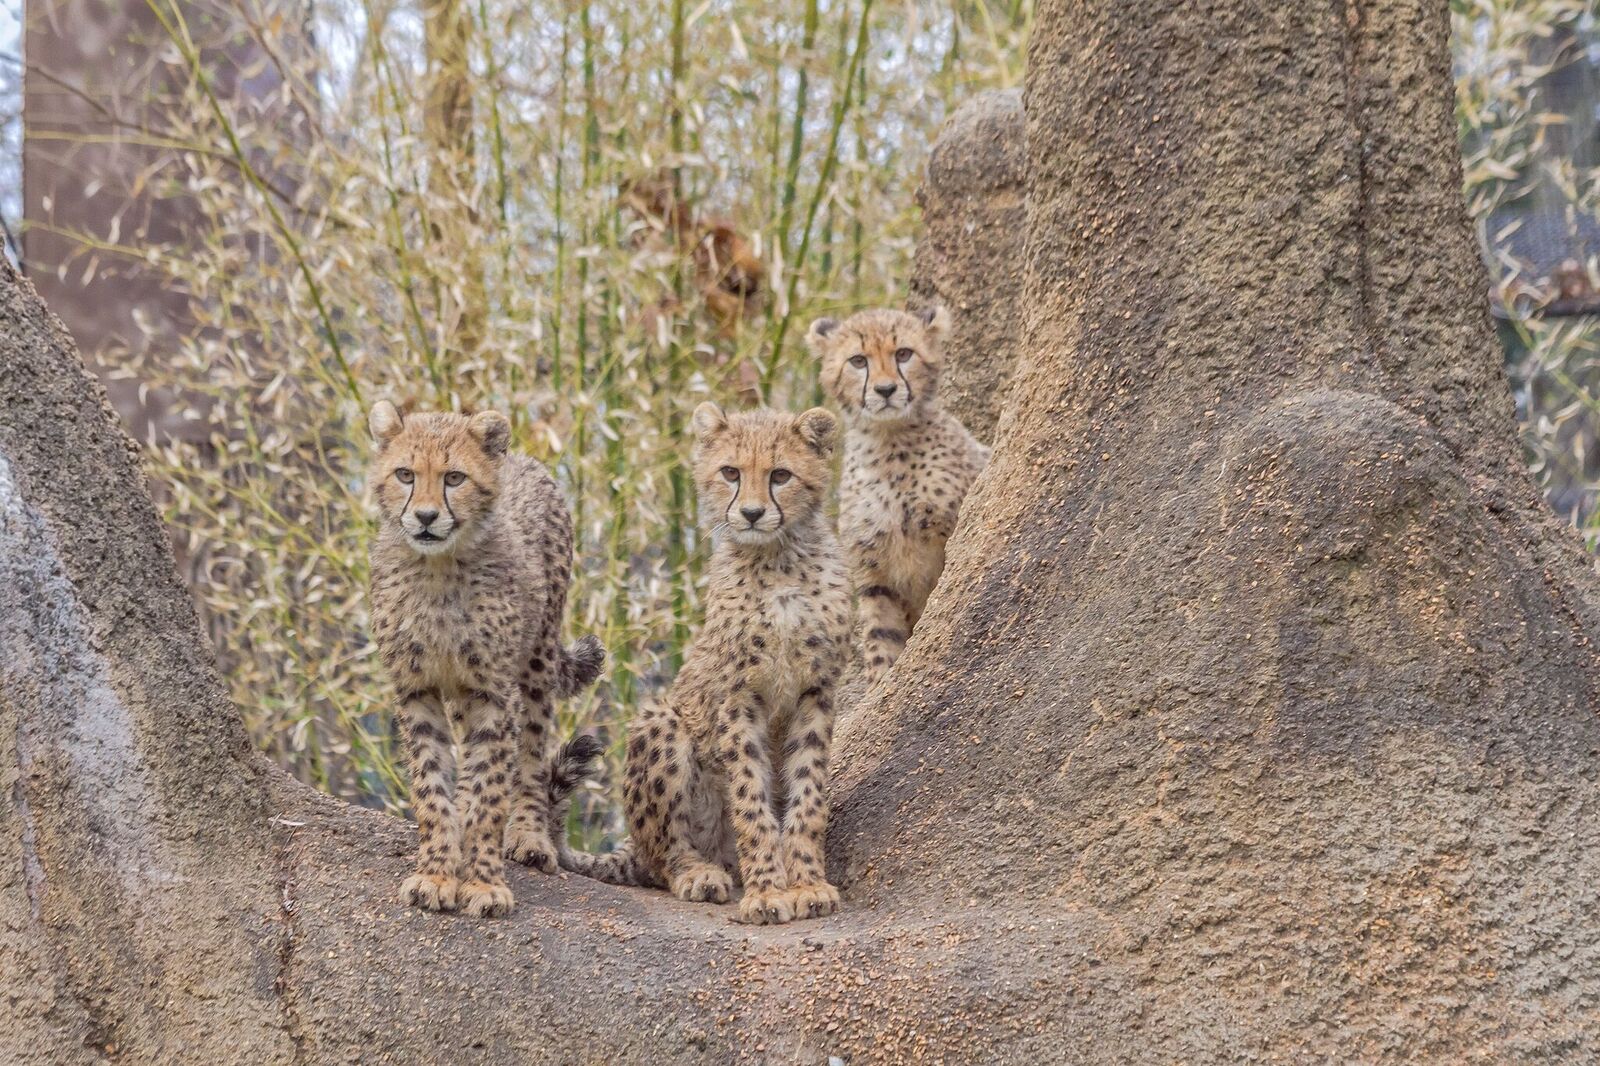 stl zoo cheetah cubs